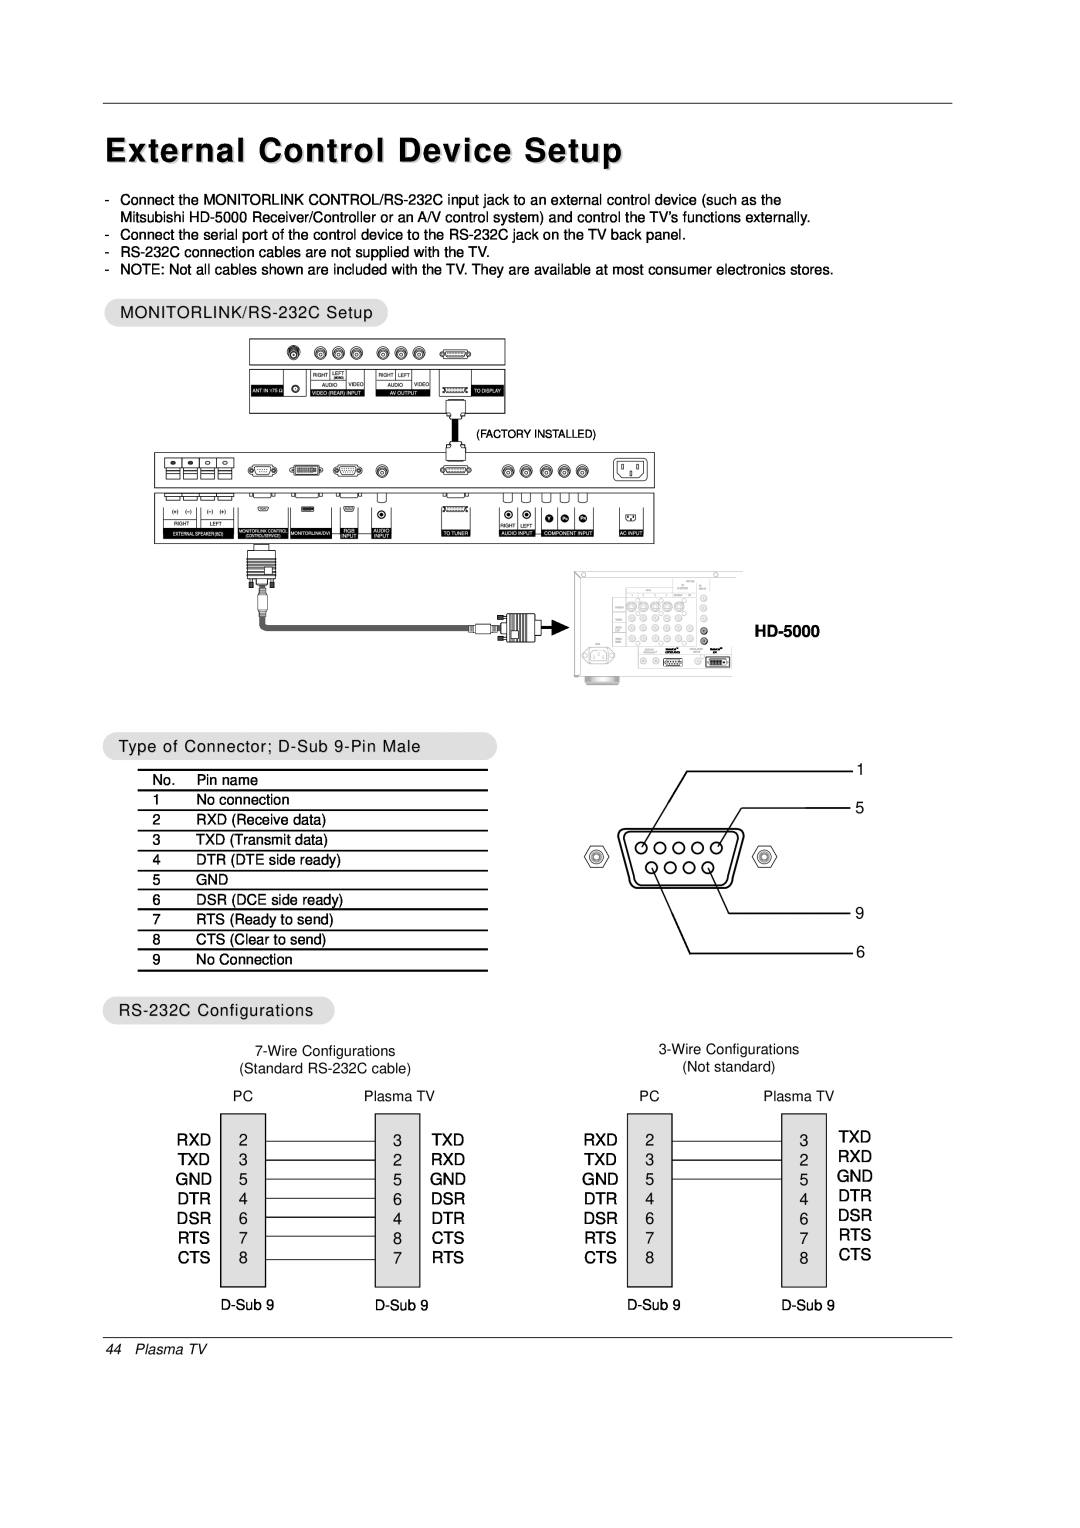 Mitsubishi Electronics PD-4225S manual External Control Device Setup, HD-5000 